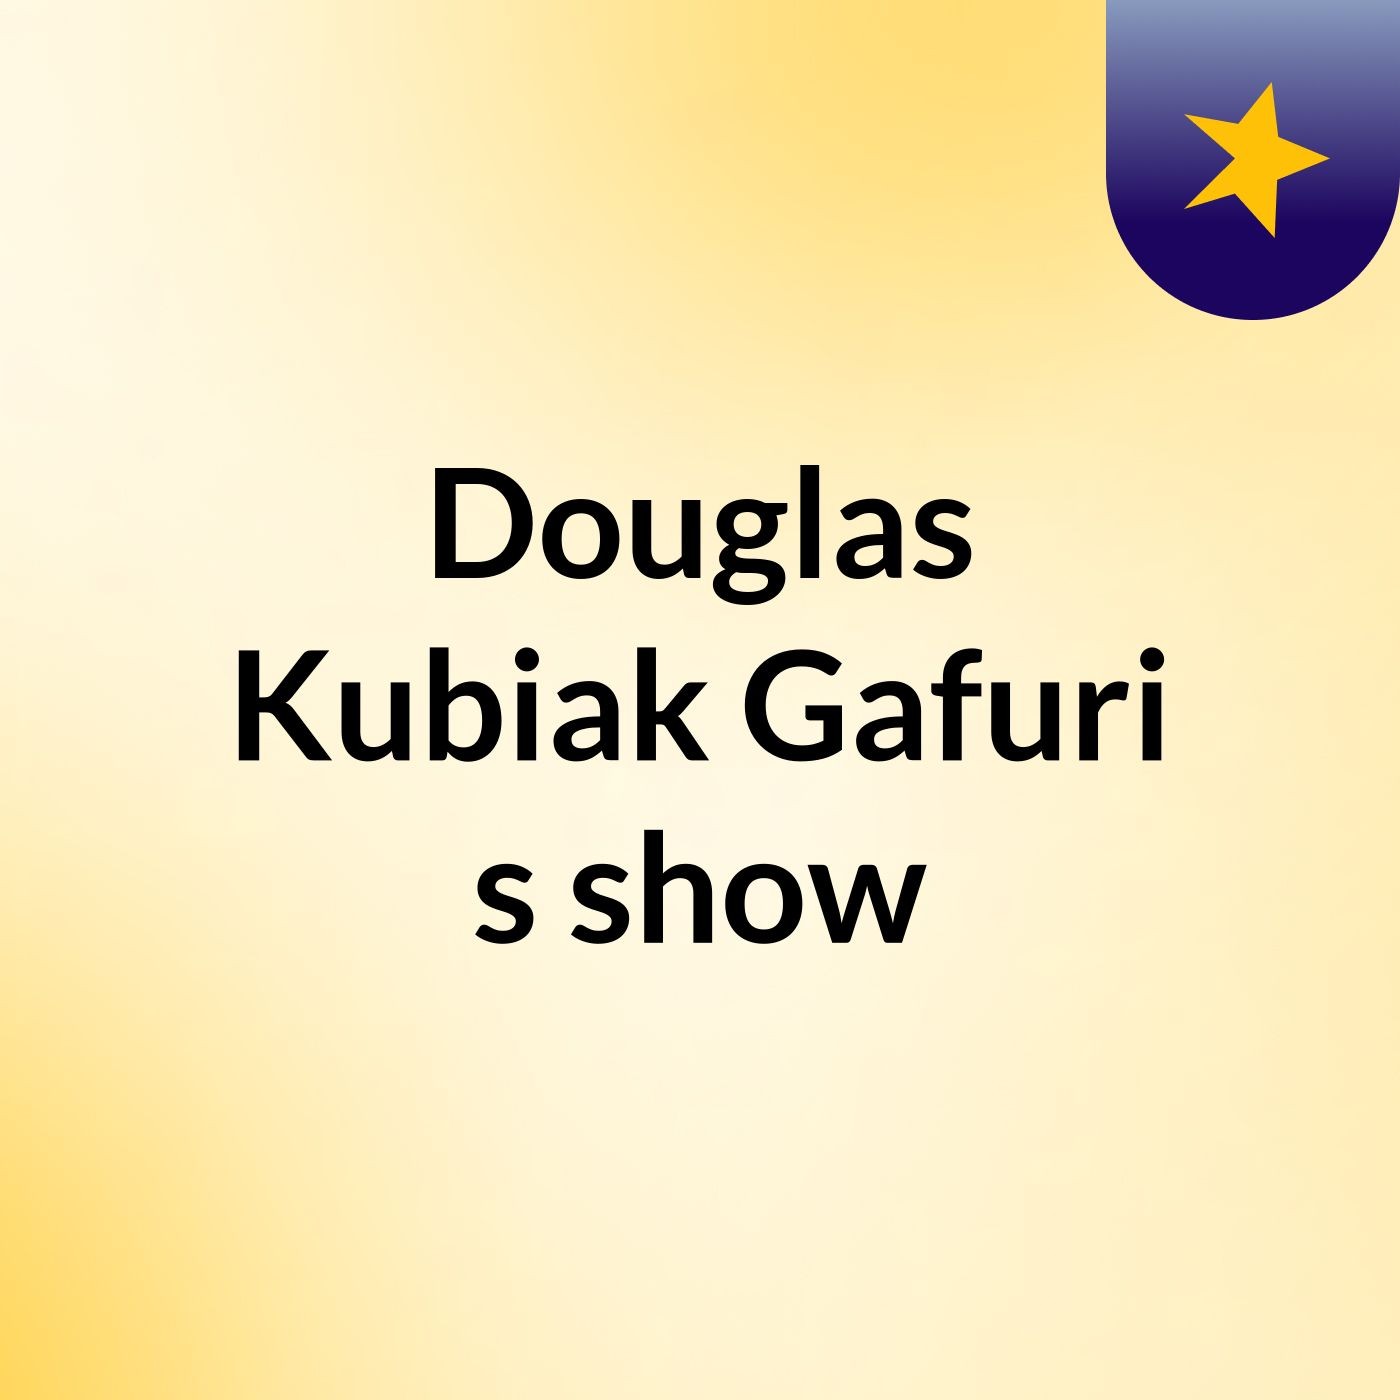 Douglas Kubiak Gafuri's show